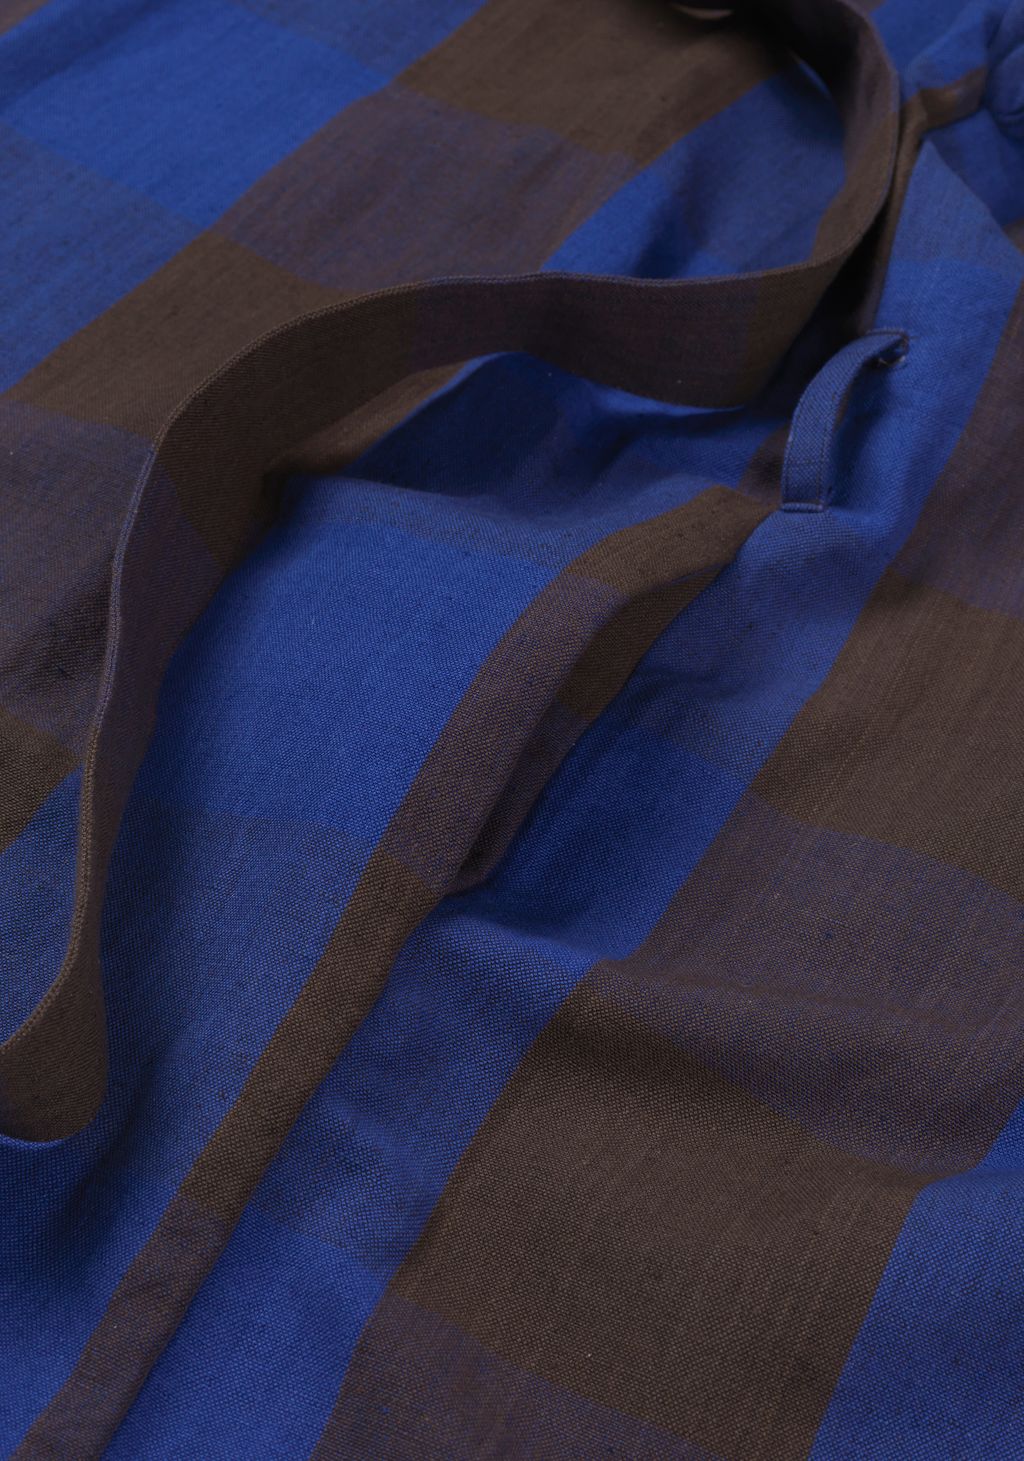 Ferm Living Veld badjas, chocolade/lichtblauw